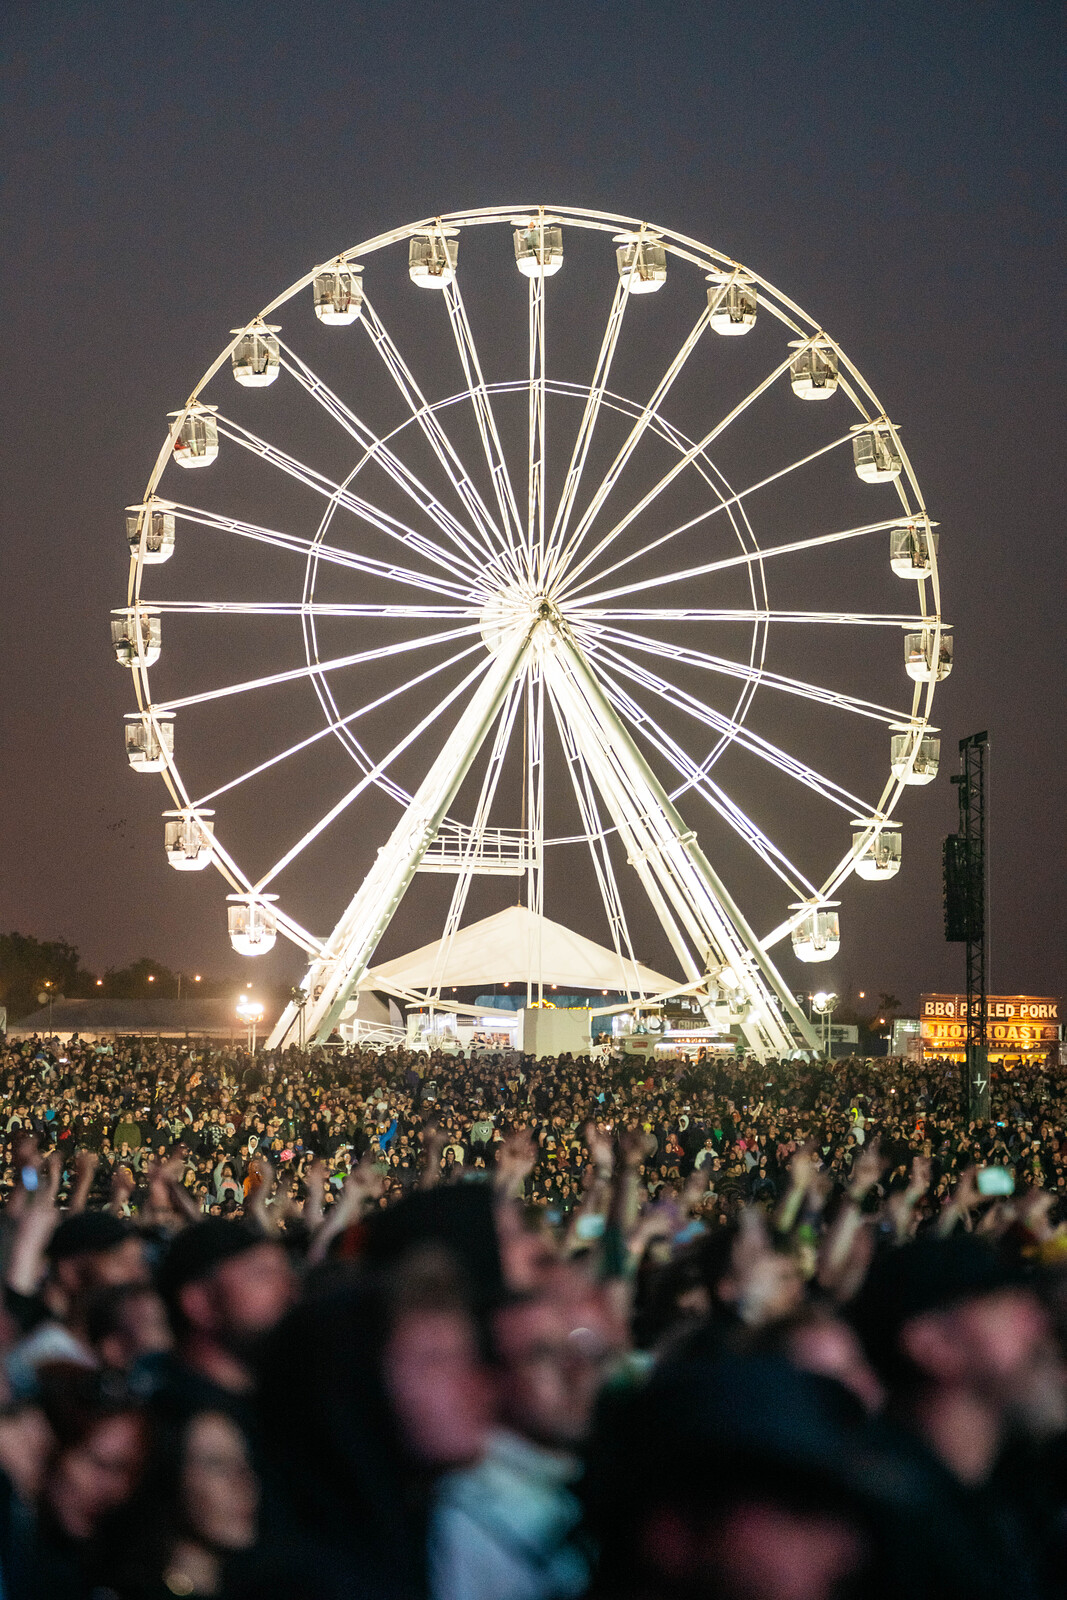 Download Festival 2023